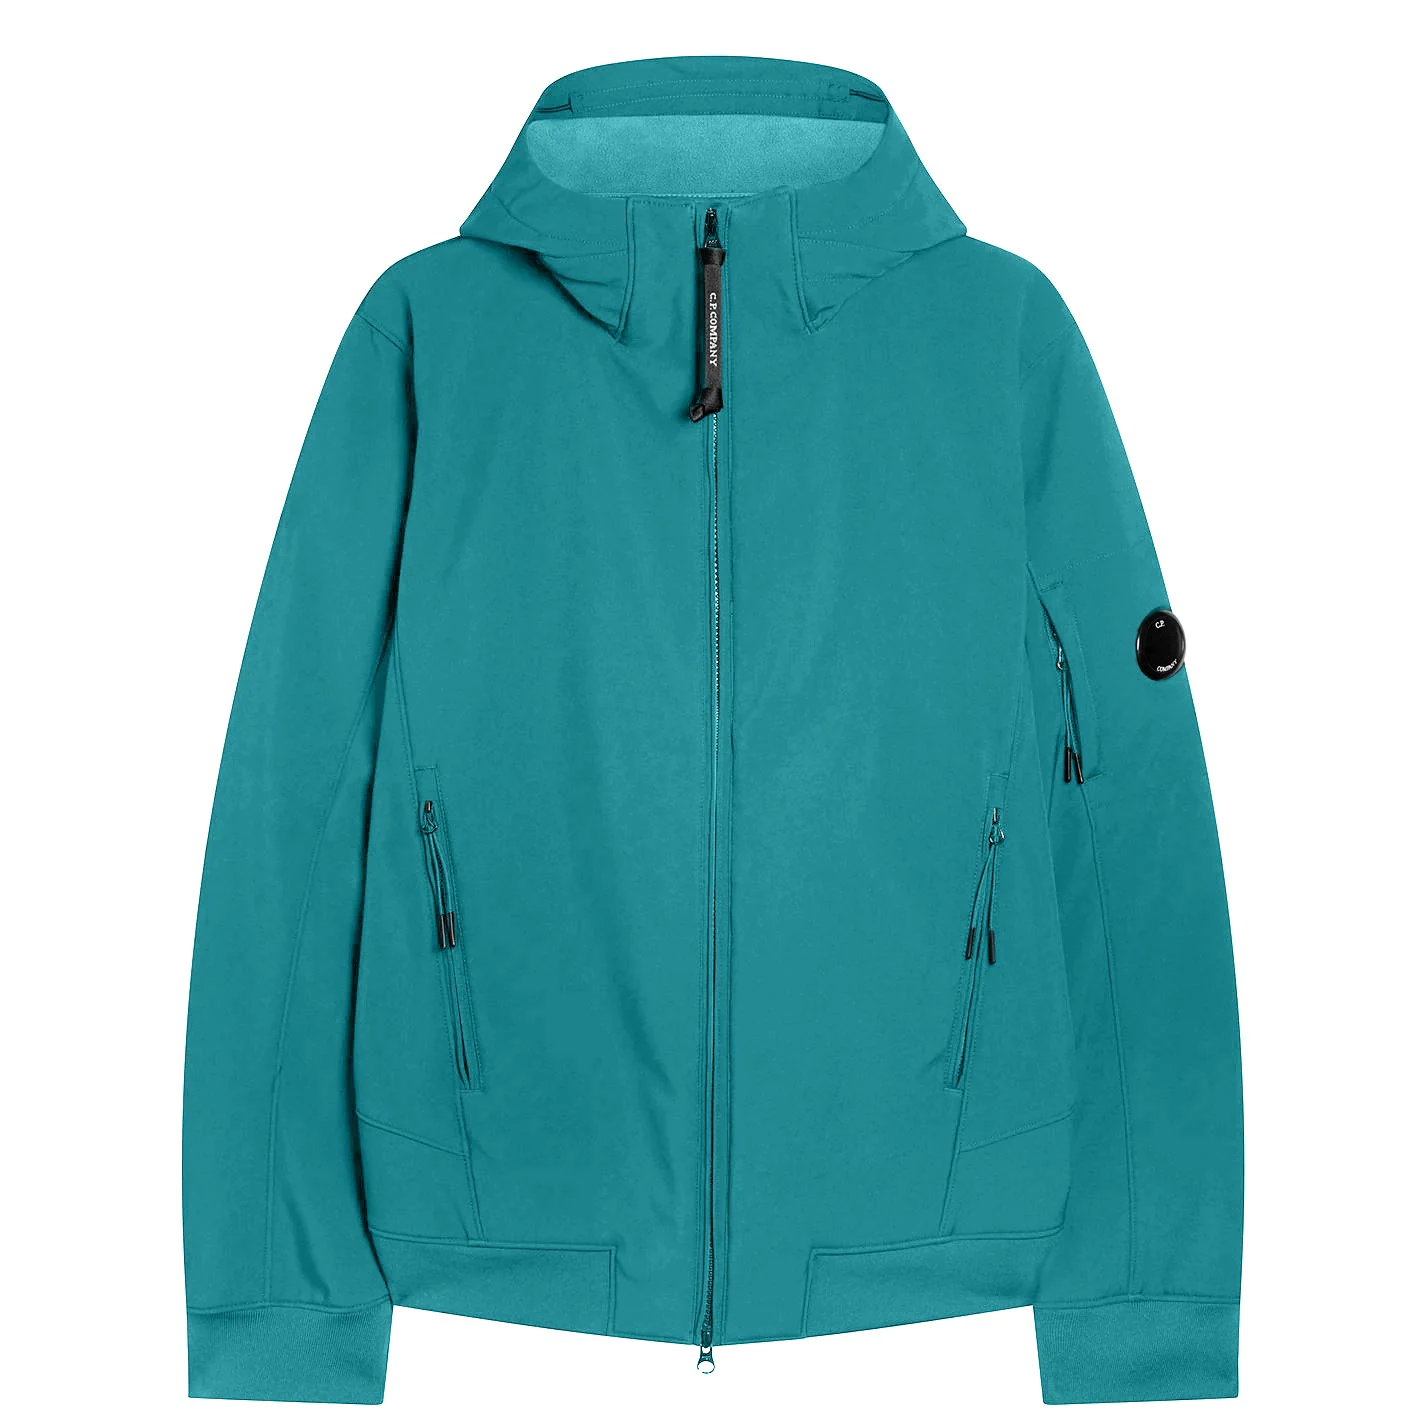 C.P. COMPANY Soft Shell Jacket Turquoise